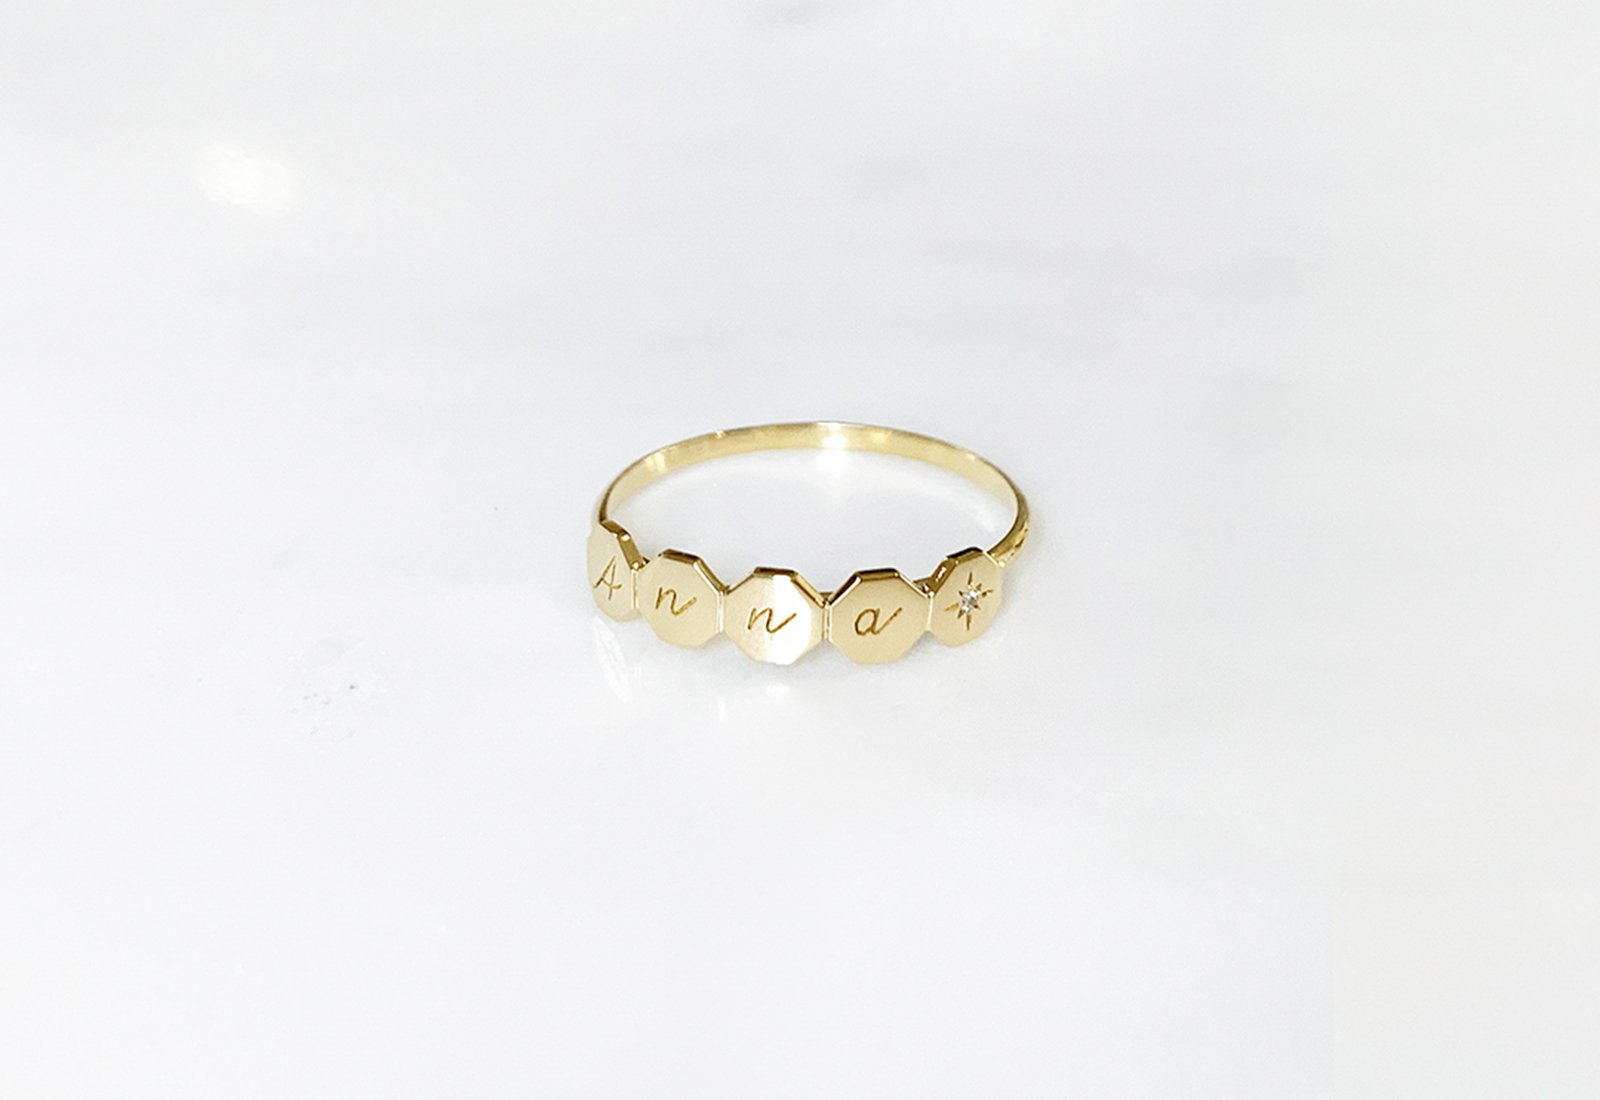 Customized Twist ring in 18K yellow gold